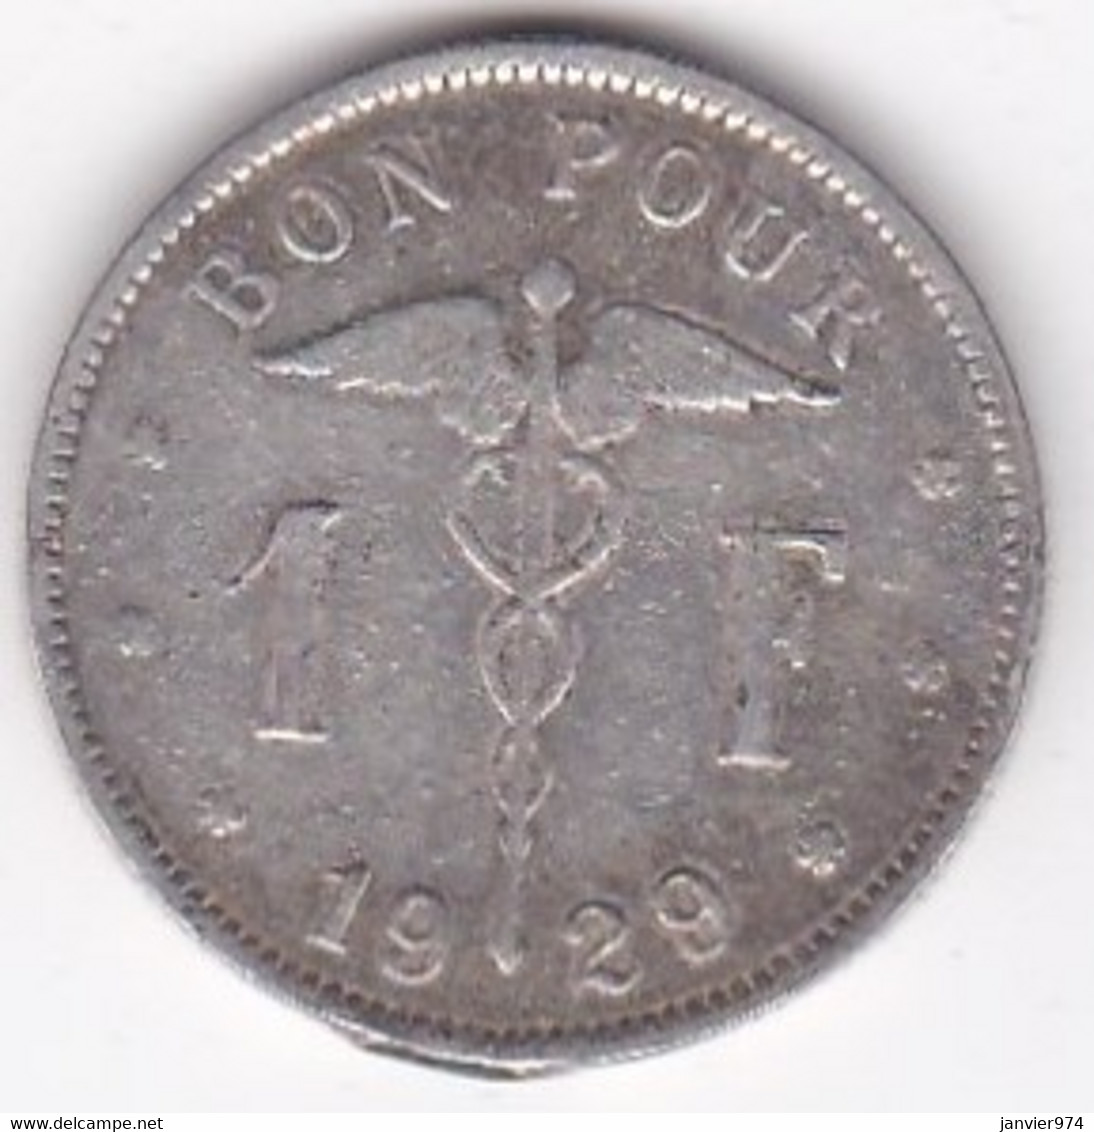 Belgique 1 Franc 1929 Type Bonnetain, Légende Francaise, Albert I , En Nickel , KM# 89 - 1 Frank